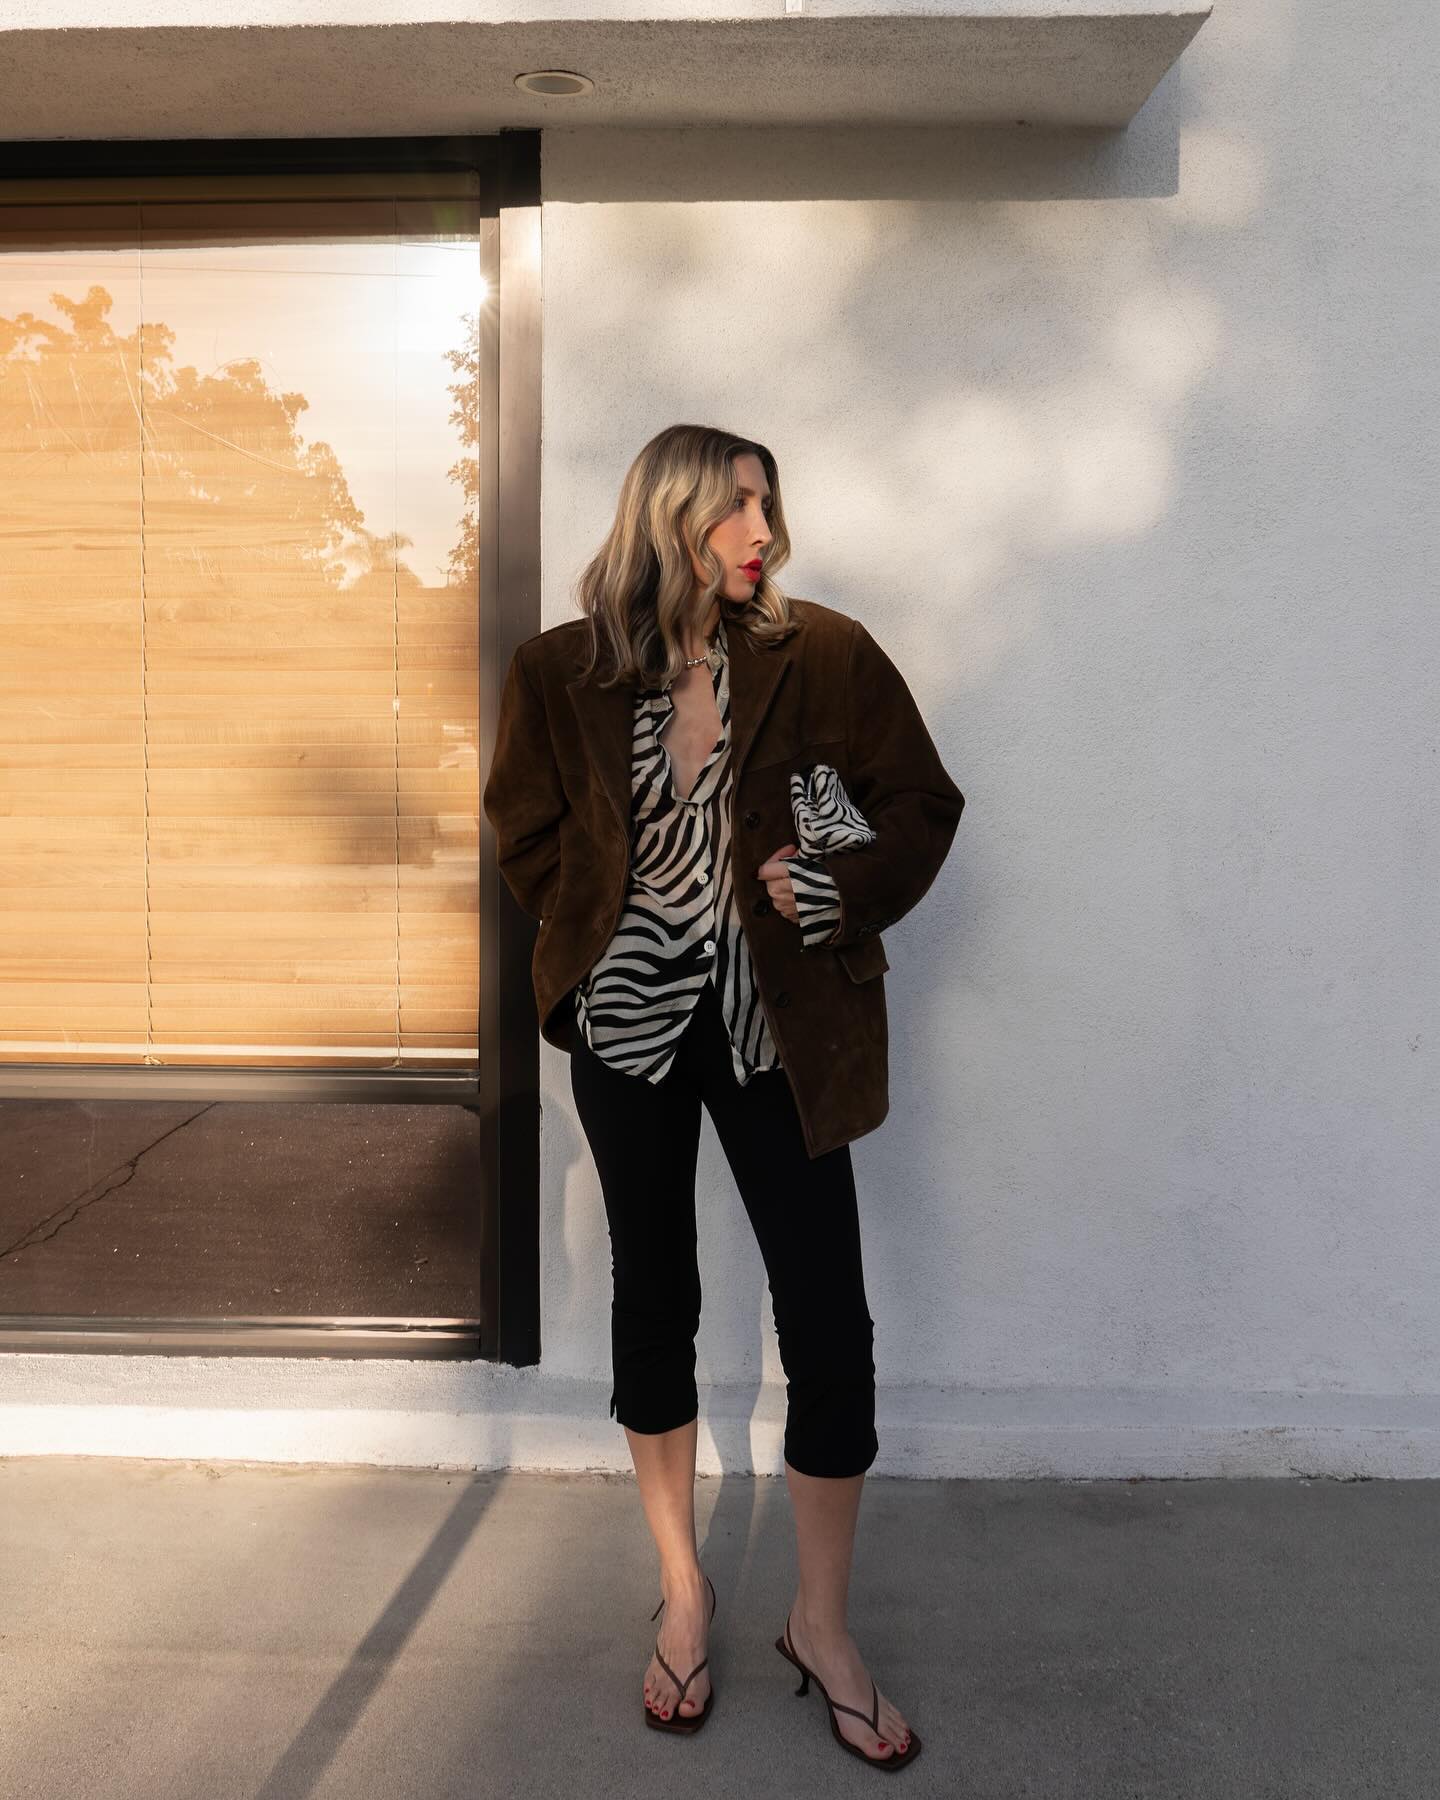 Los Angeles–based influencer Angela Fink poses on a sidewalk wearing a brown blazer, sheer zebra-print button-down shirt, zebra-print bag, capri pants and flip-flop sandals